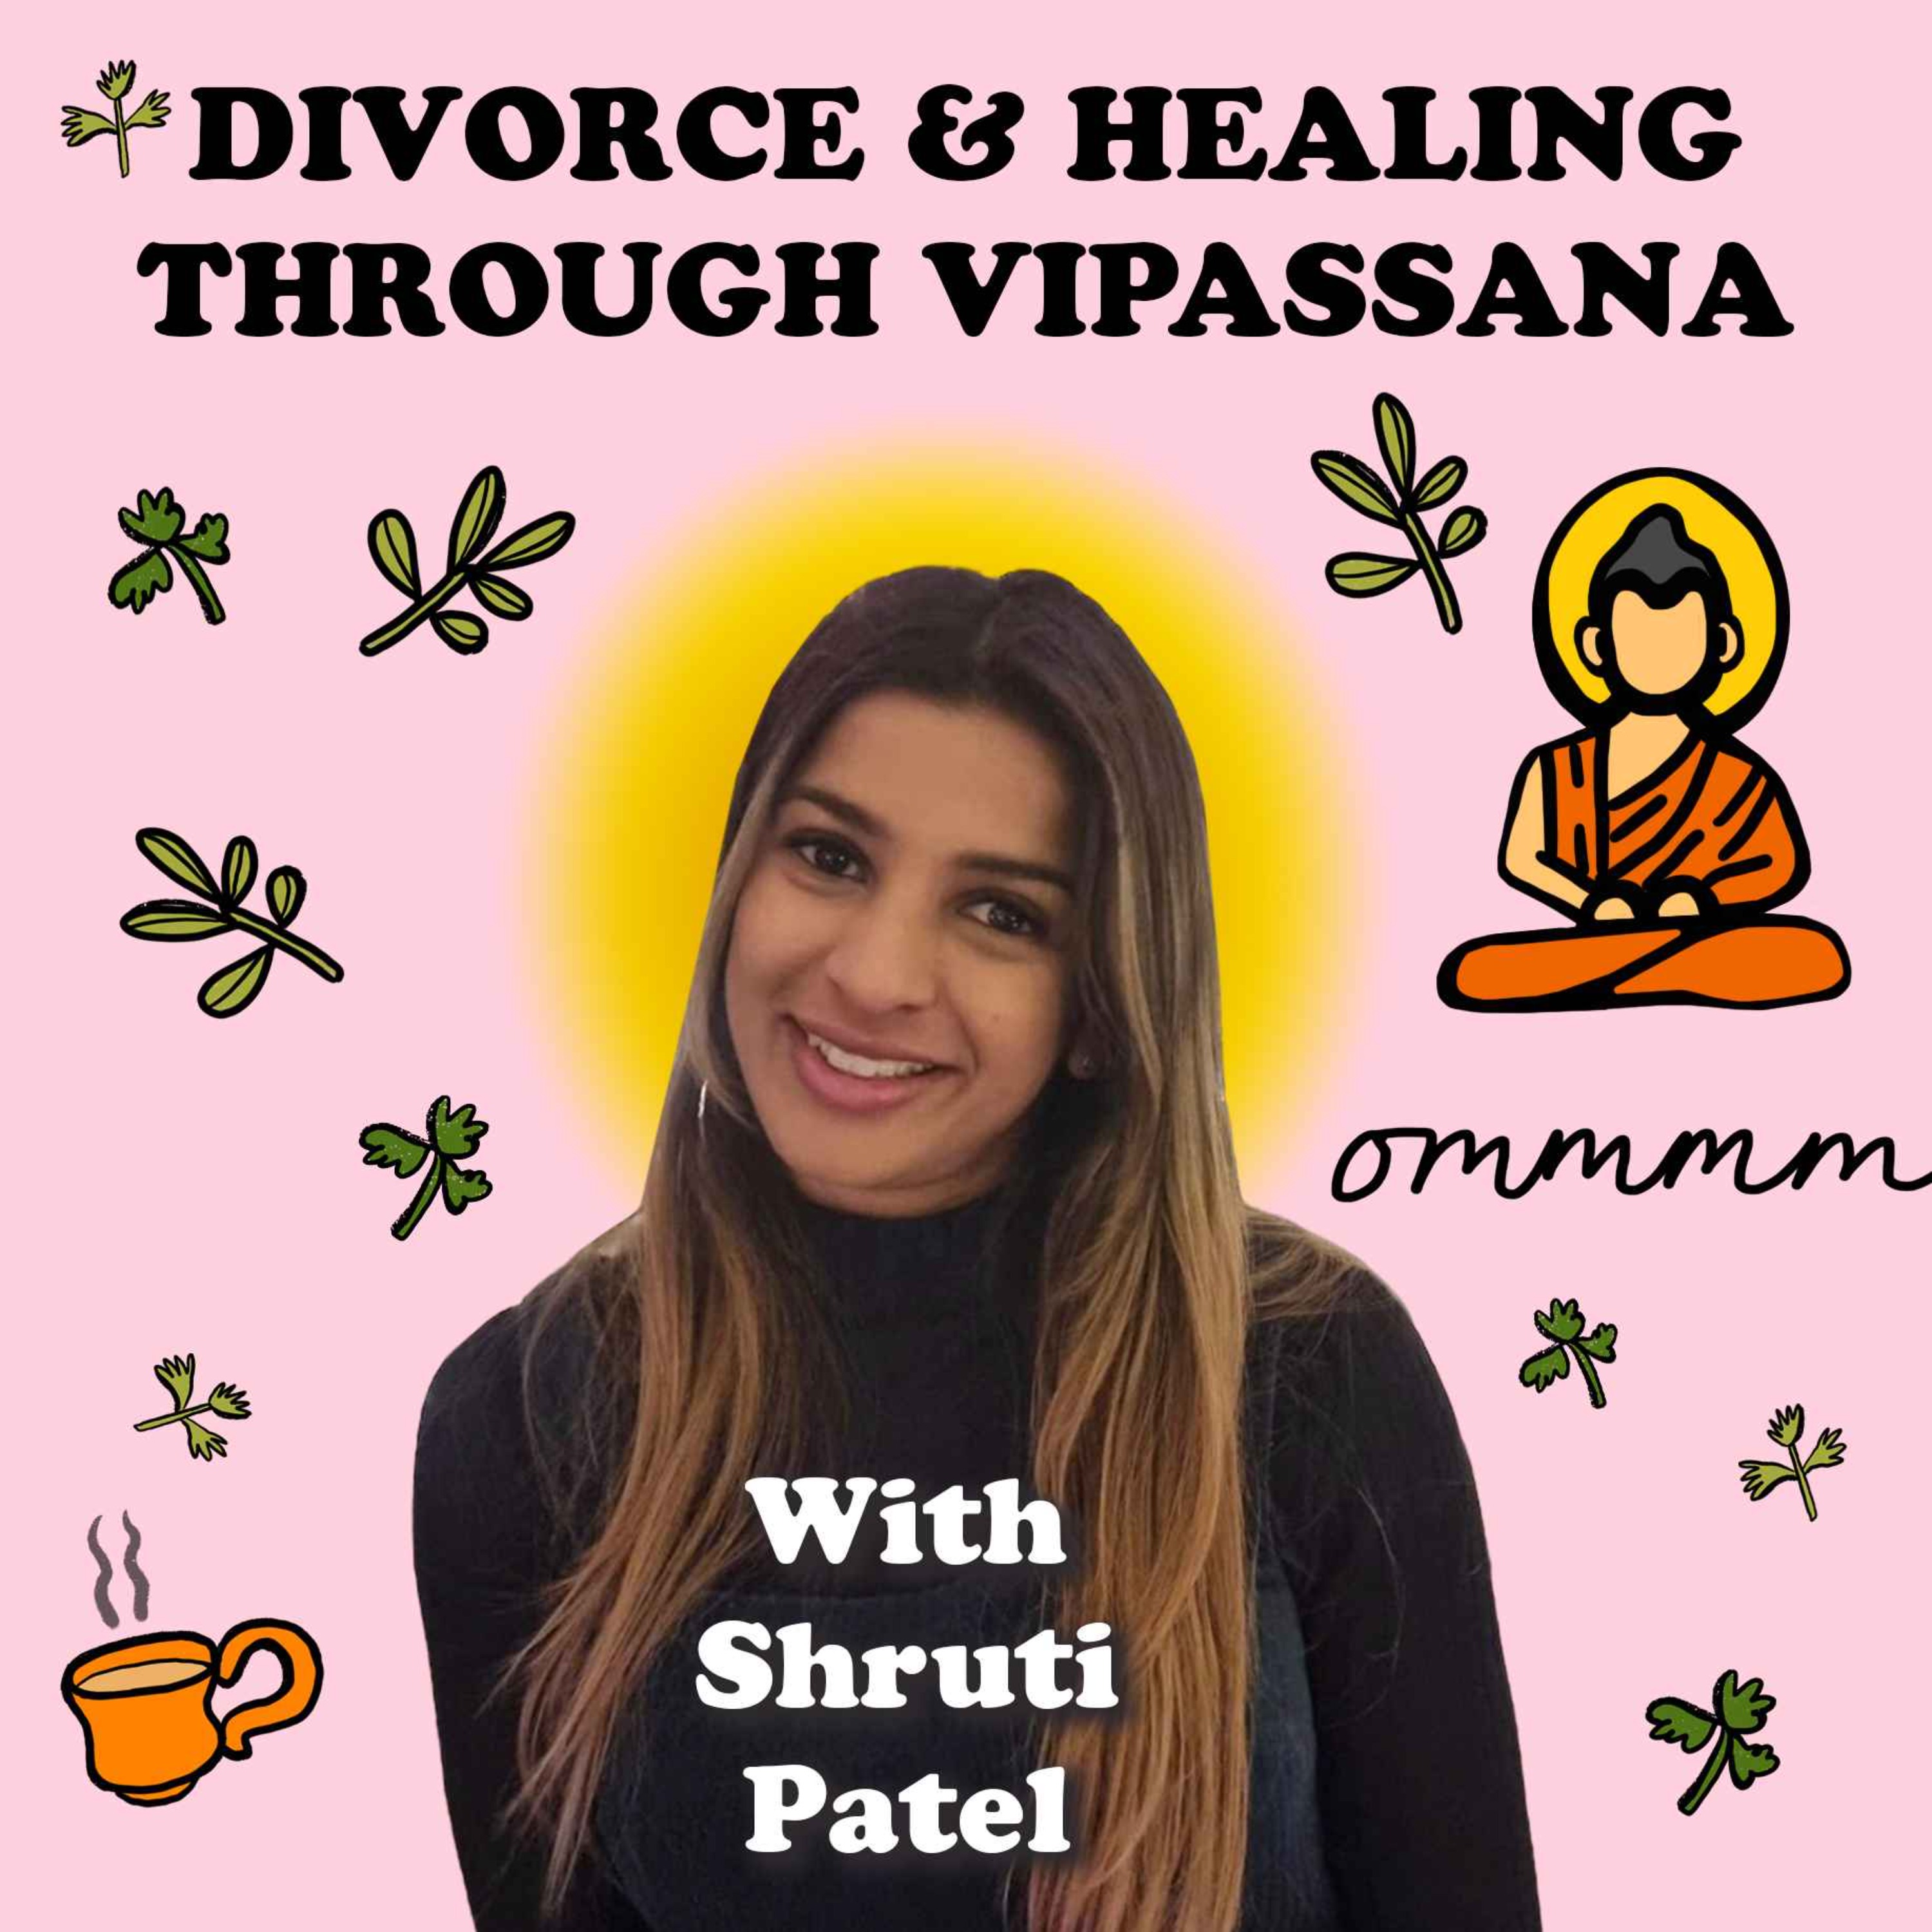 #7 Life After Divorce & Healing Through Vipassana with Shruti Patel